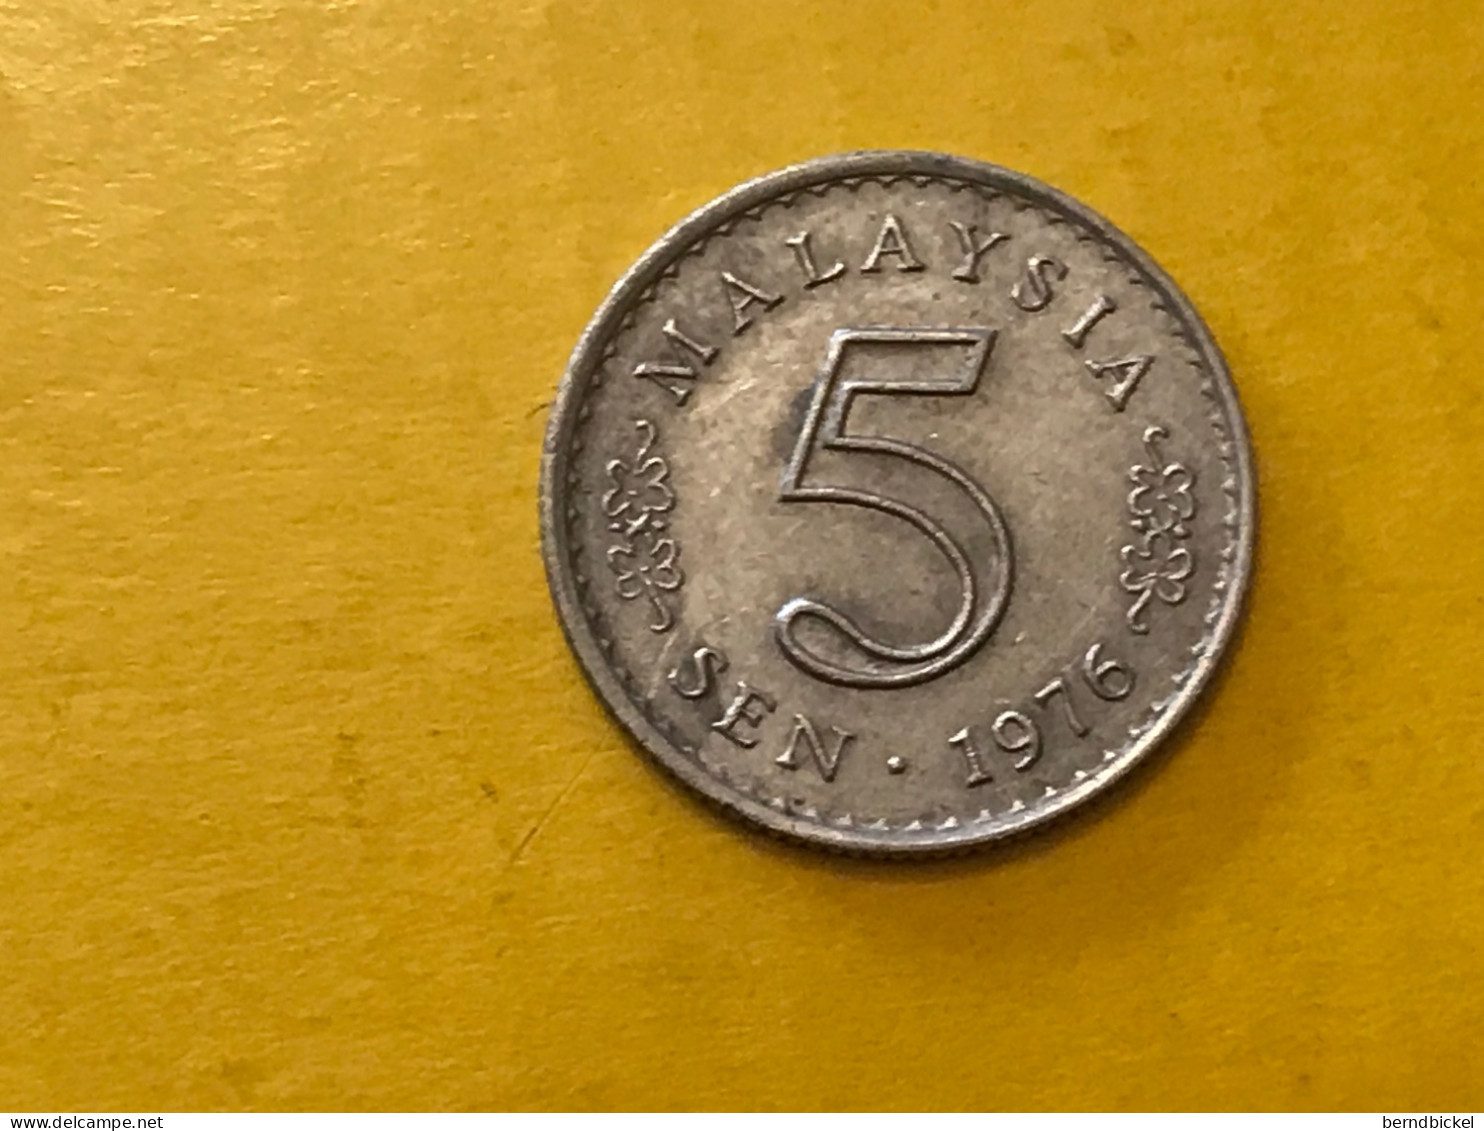 Münze Münzen Umlaufmünze Malaysia 5 Sen 1976 - Malaysie